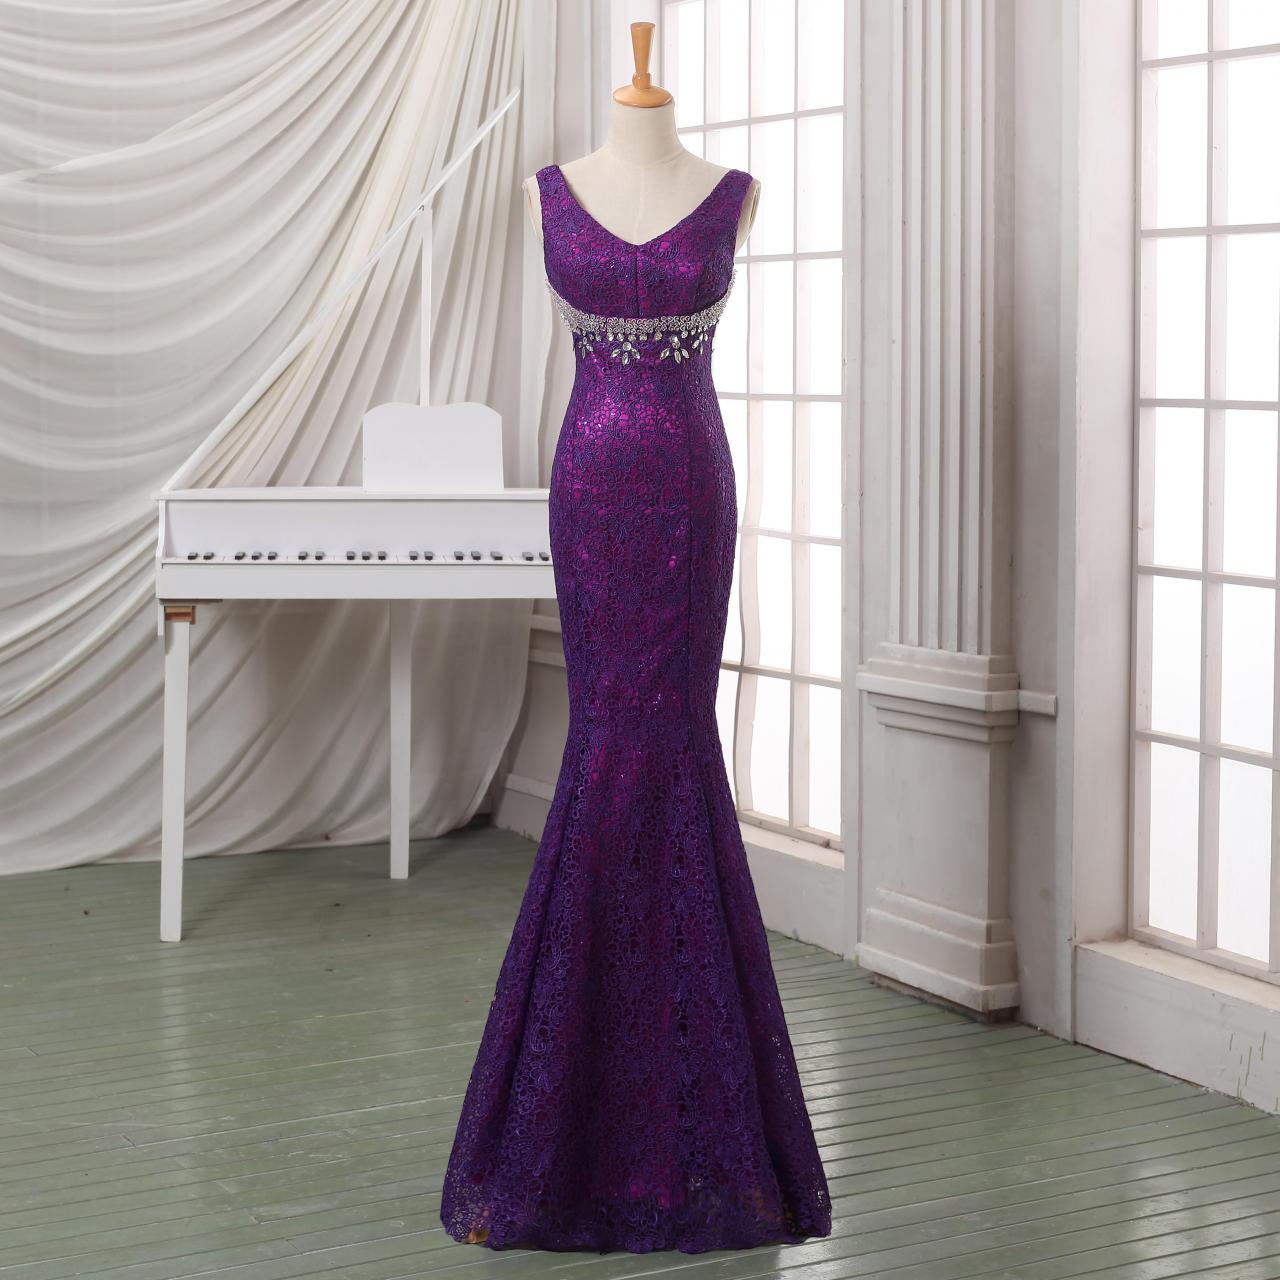 Prom Dresses,evening Dress,party Dresses,purple Mermaid Evening Dress,formal Dress,v Neck Slim Line Lace Long Formal Evening Dress,pageant Dress